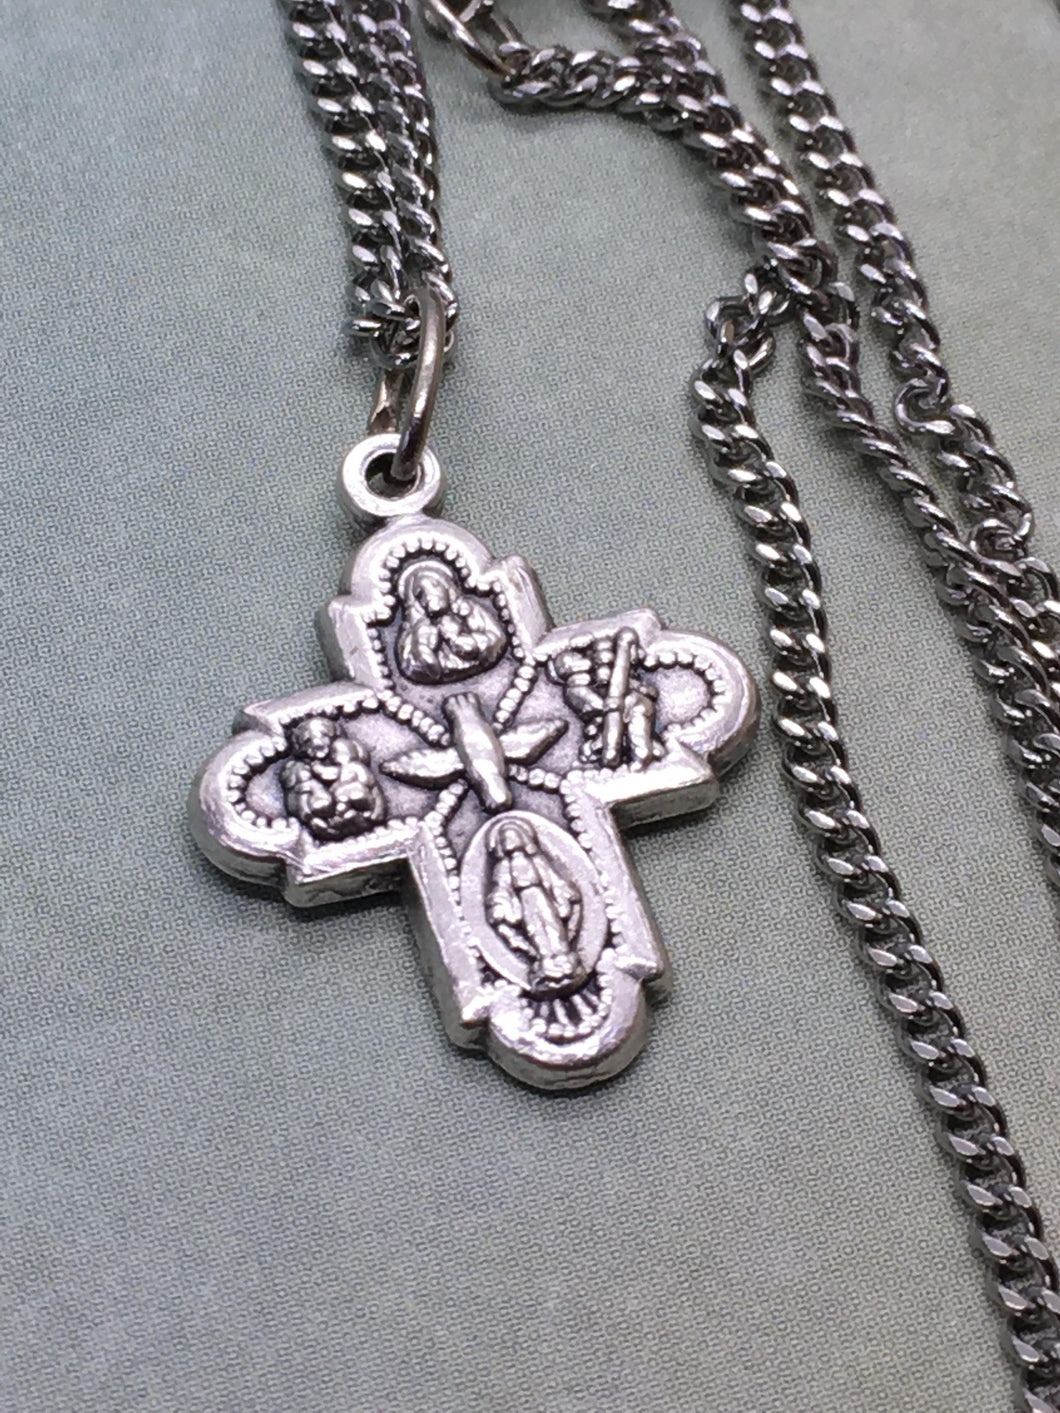 4-way cross necklace.